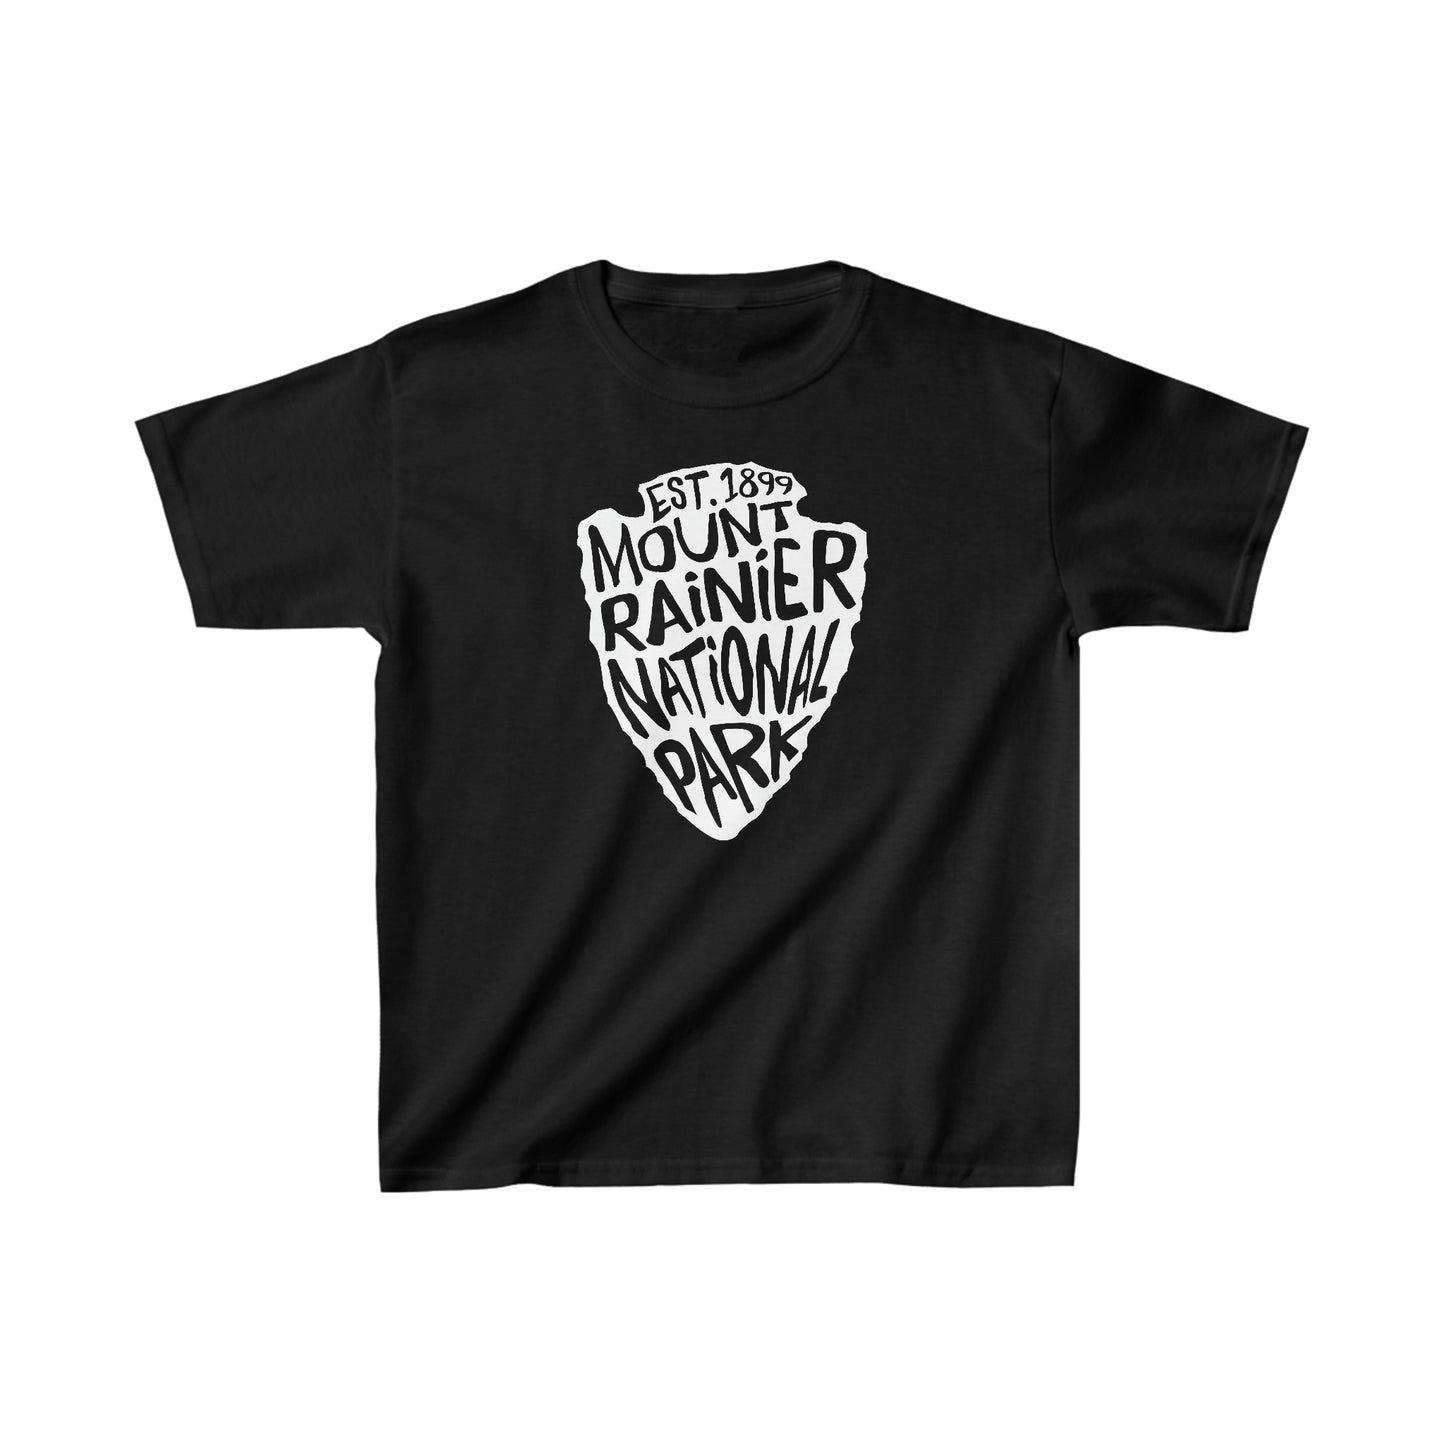 Mount Rainier National Park Child T-Shirt - Arrowhead Design